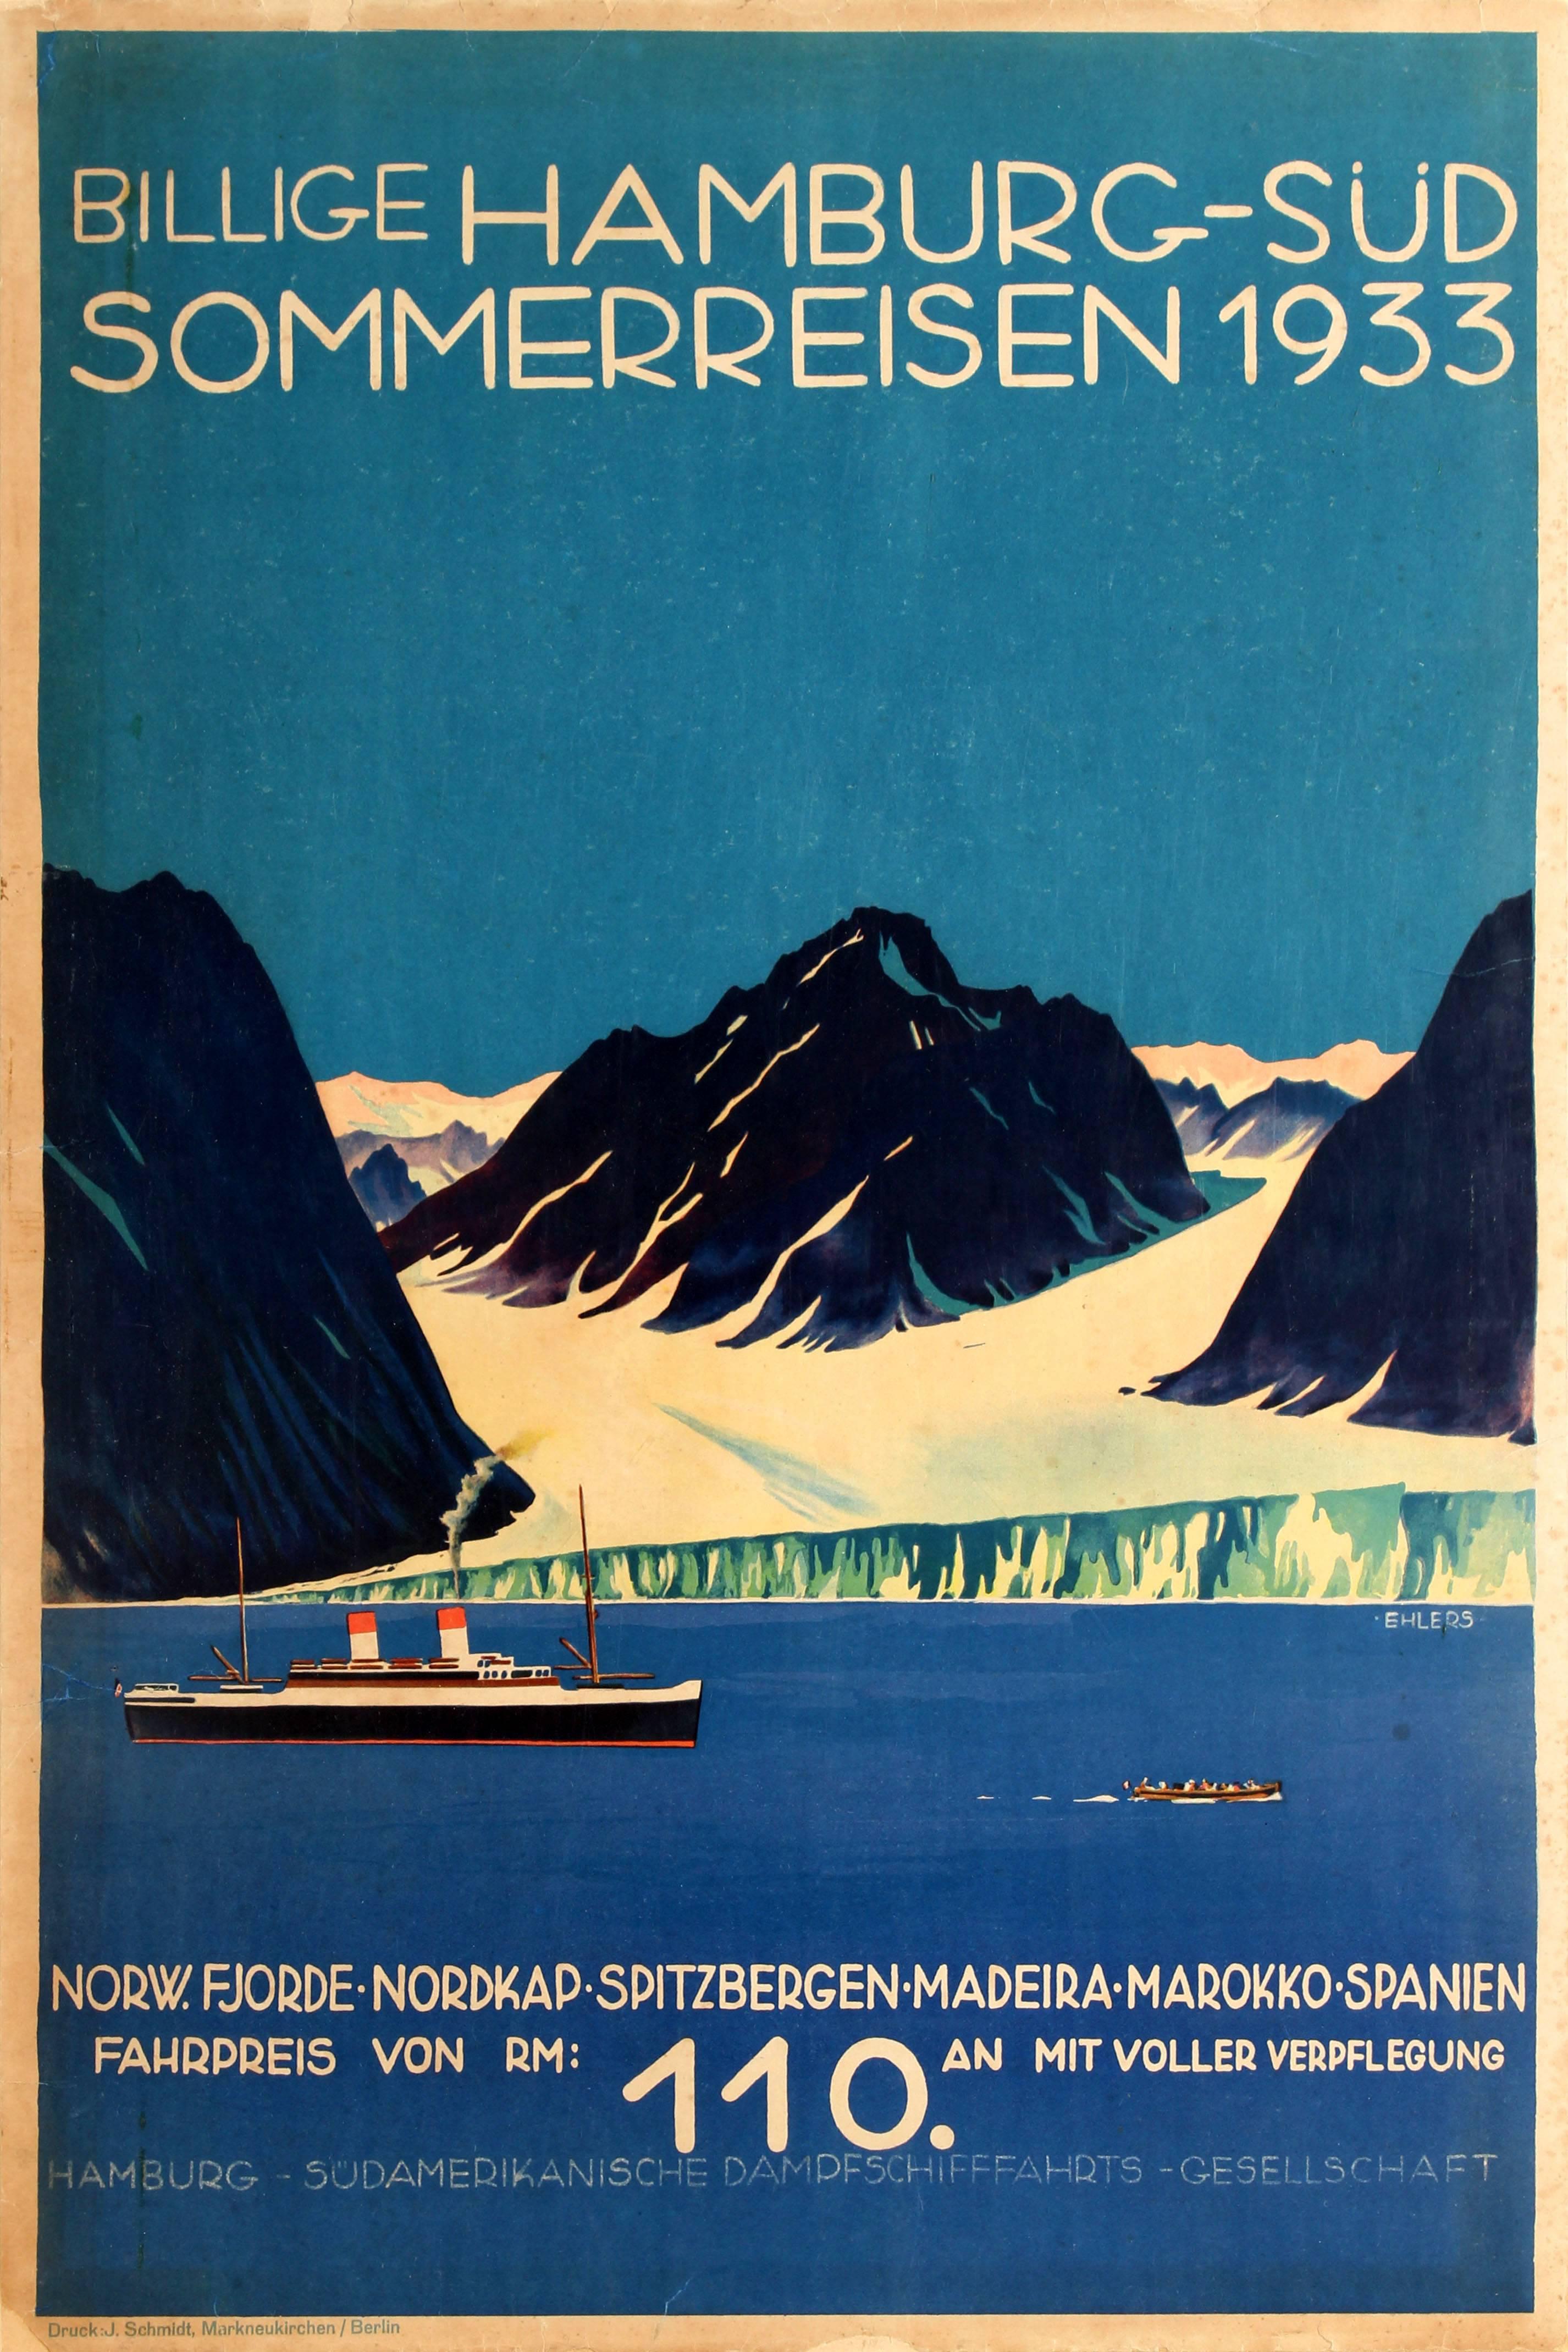 Henry Ehlers Print - Original Vintage Art Deco Cruise Ship Travel Poster For Hamburg Sud Summer Trips